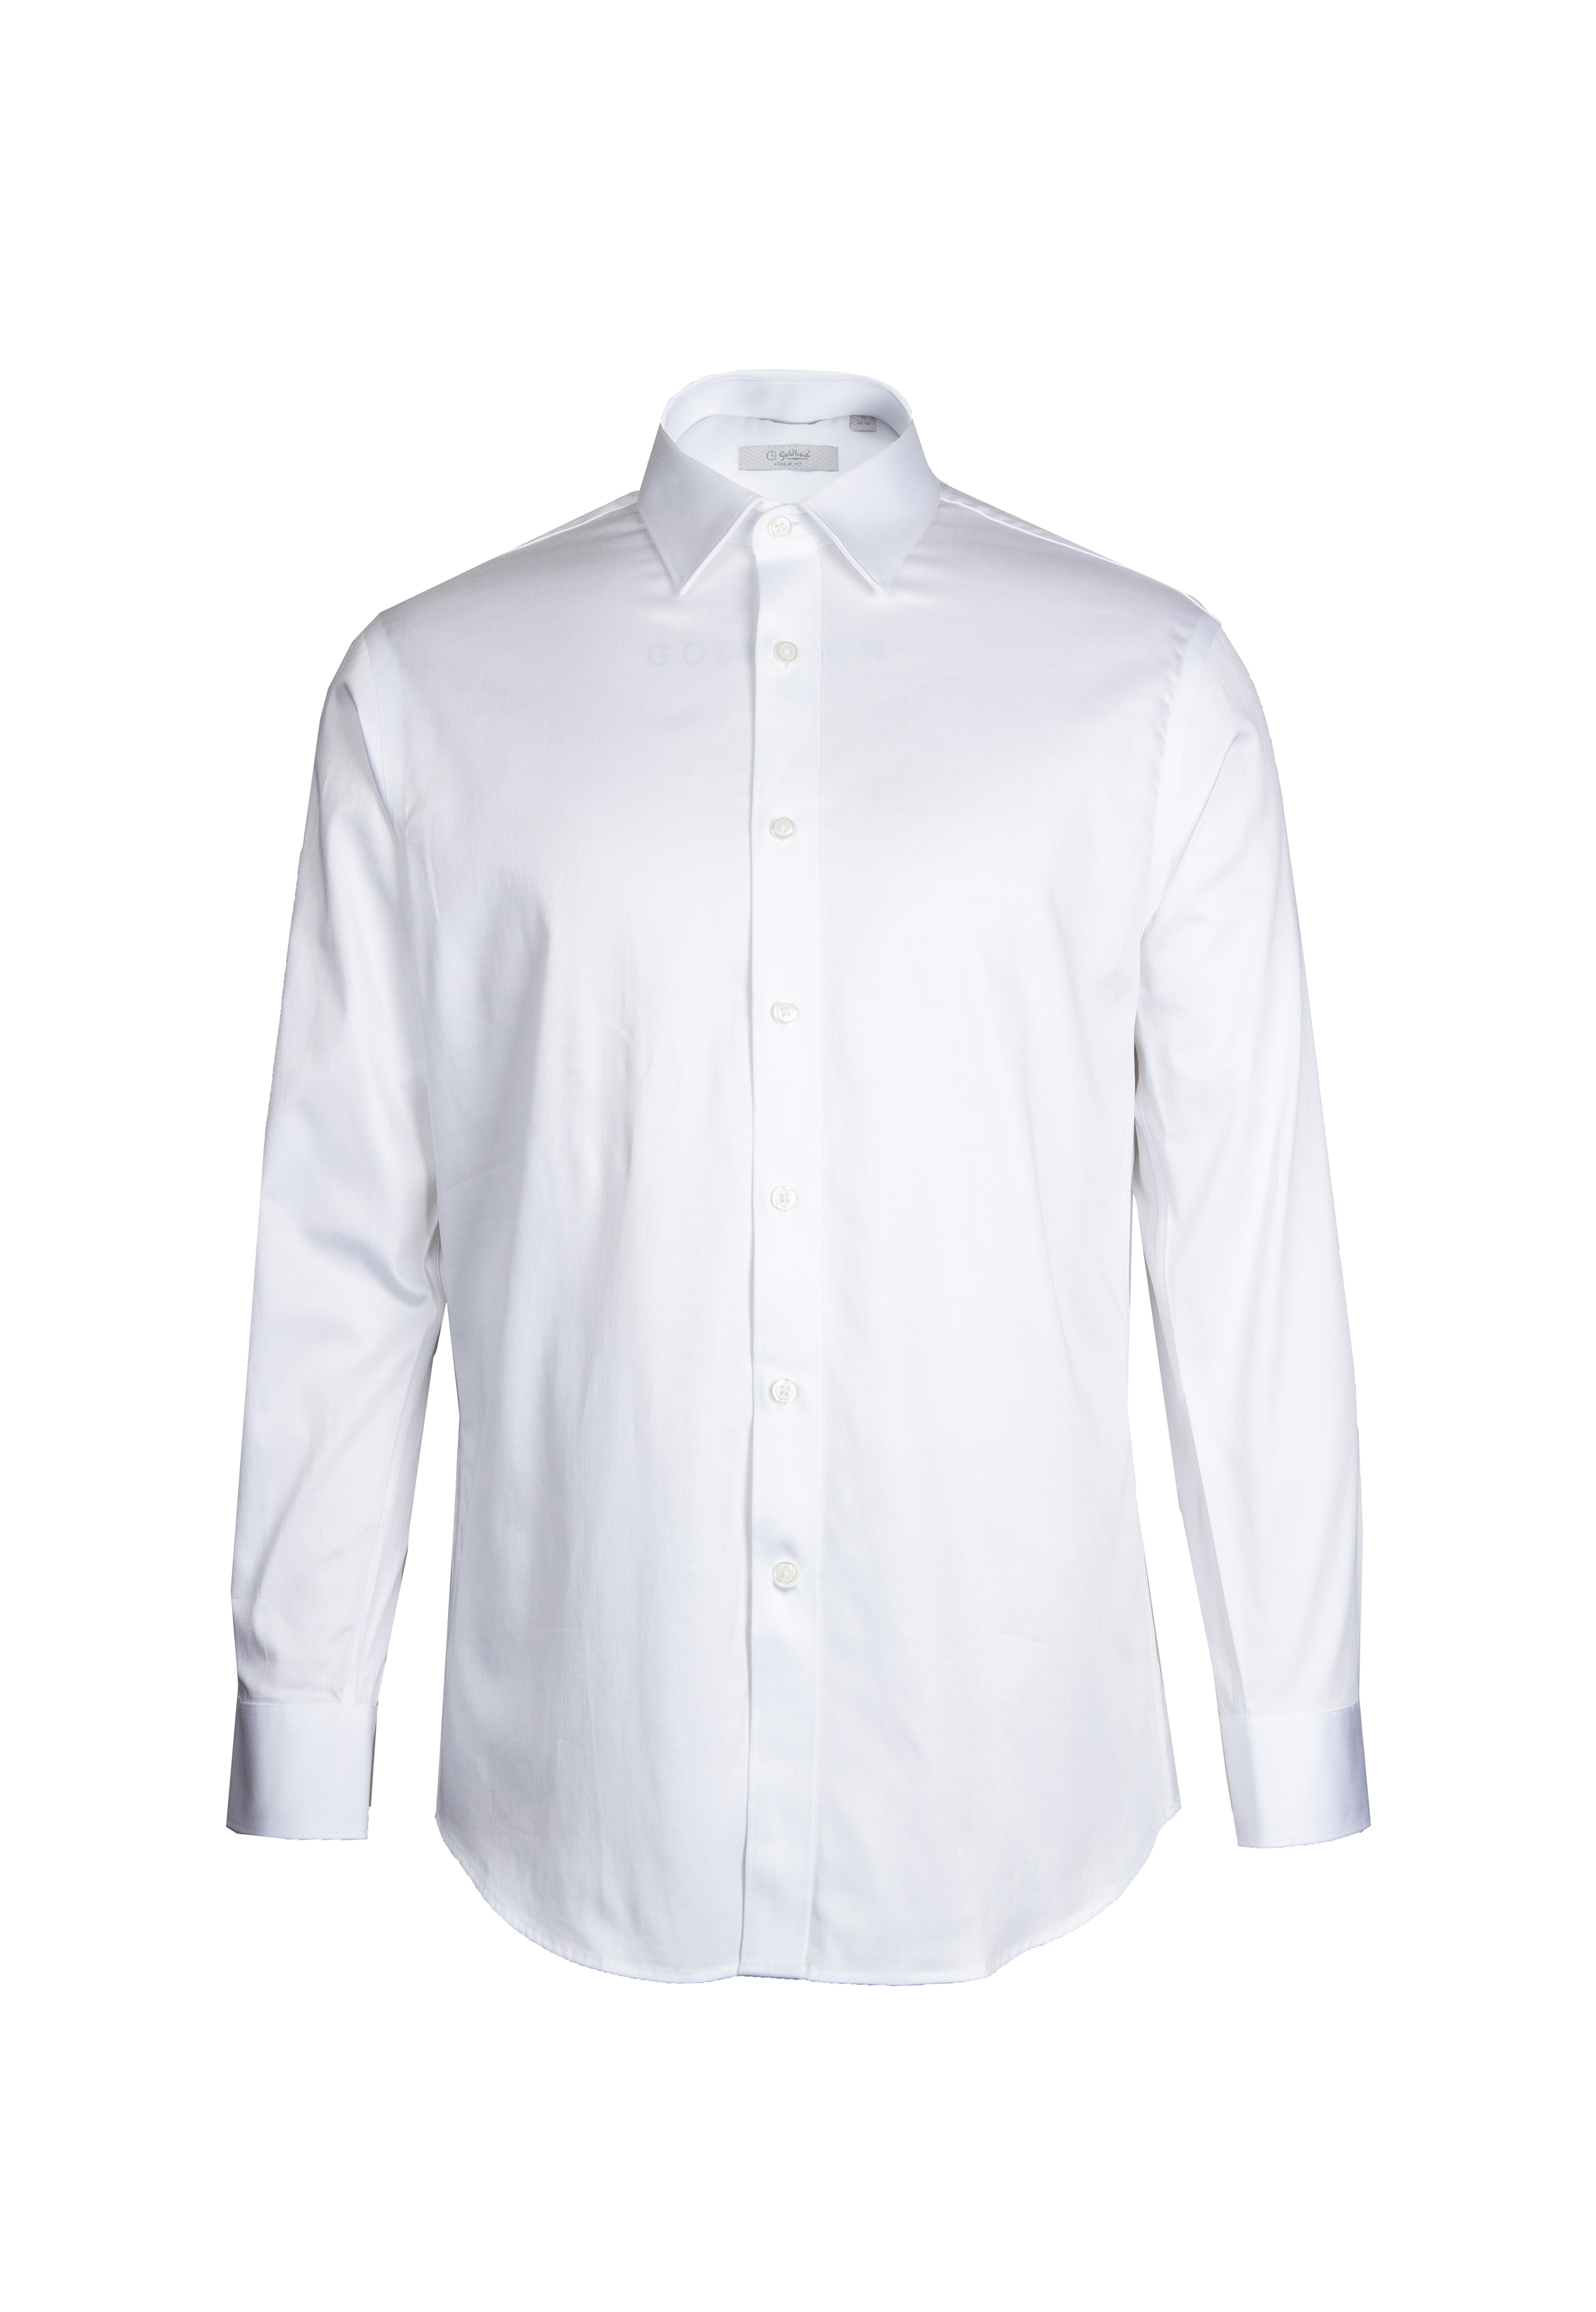 [Online Exclusive] Goldlion Business Regular Fit Long-Sleeved Shirt (White)